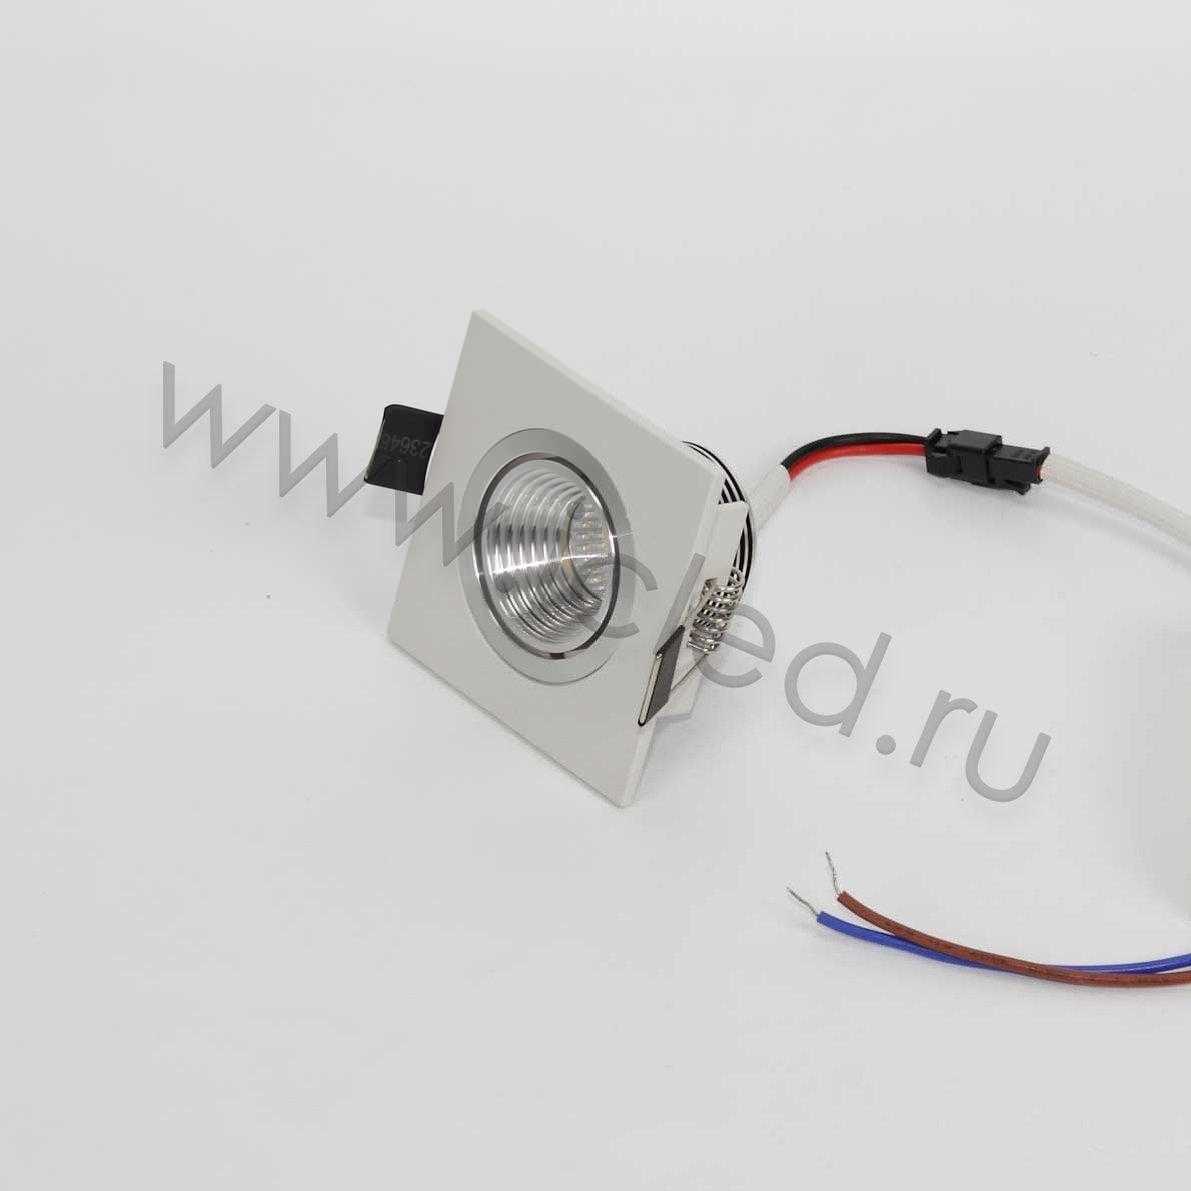 Светодиодные светильники Светодиодный светильник встраиваемый 65 Series white housing BW302 (3W,220V,day white)